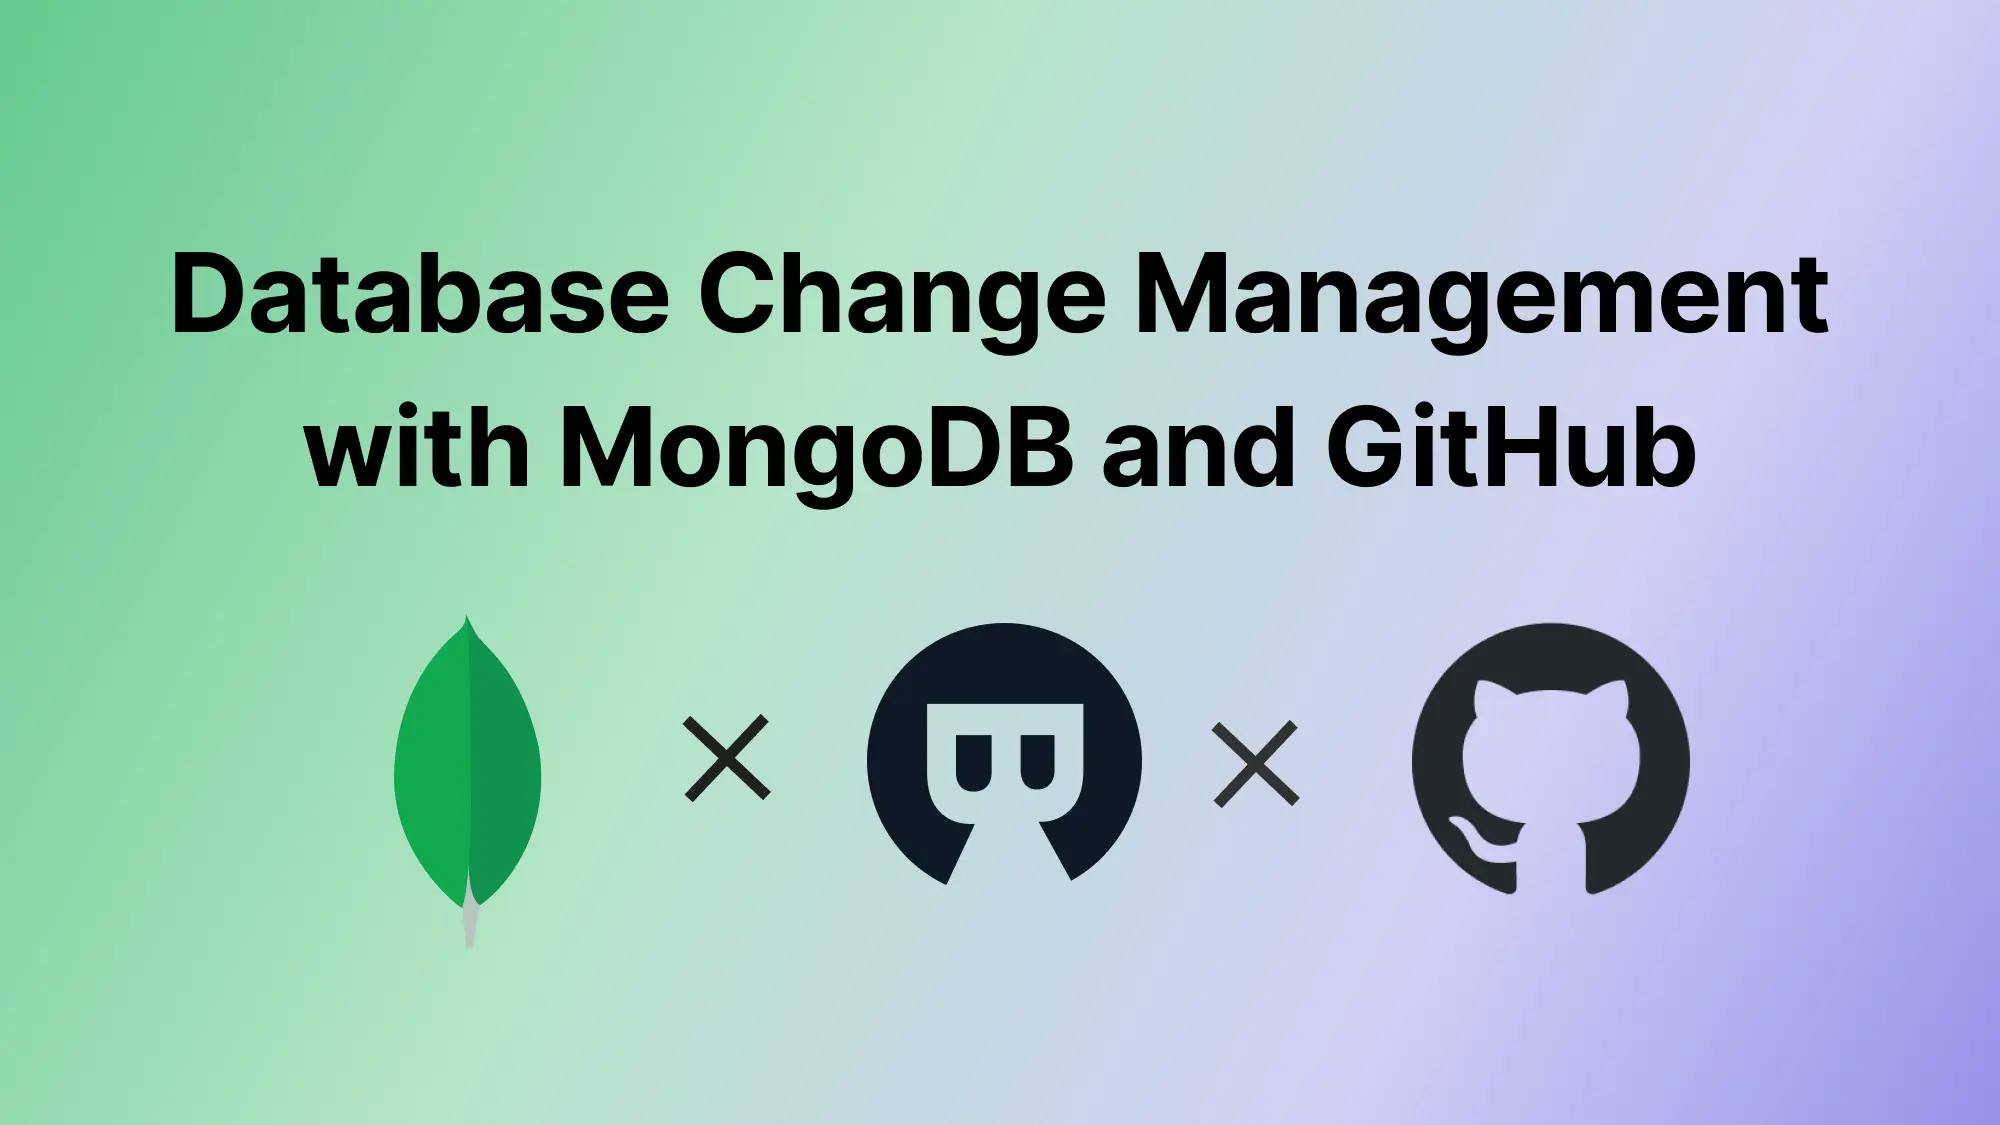 DevOps: Database Change Management with MongoDB and GitHub